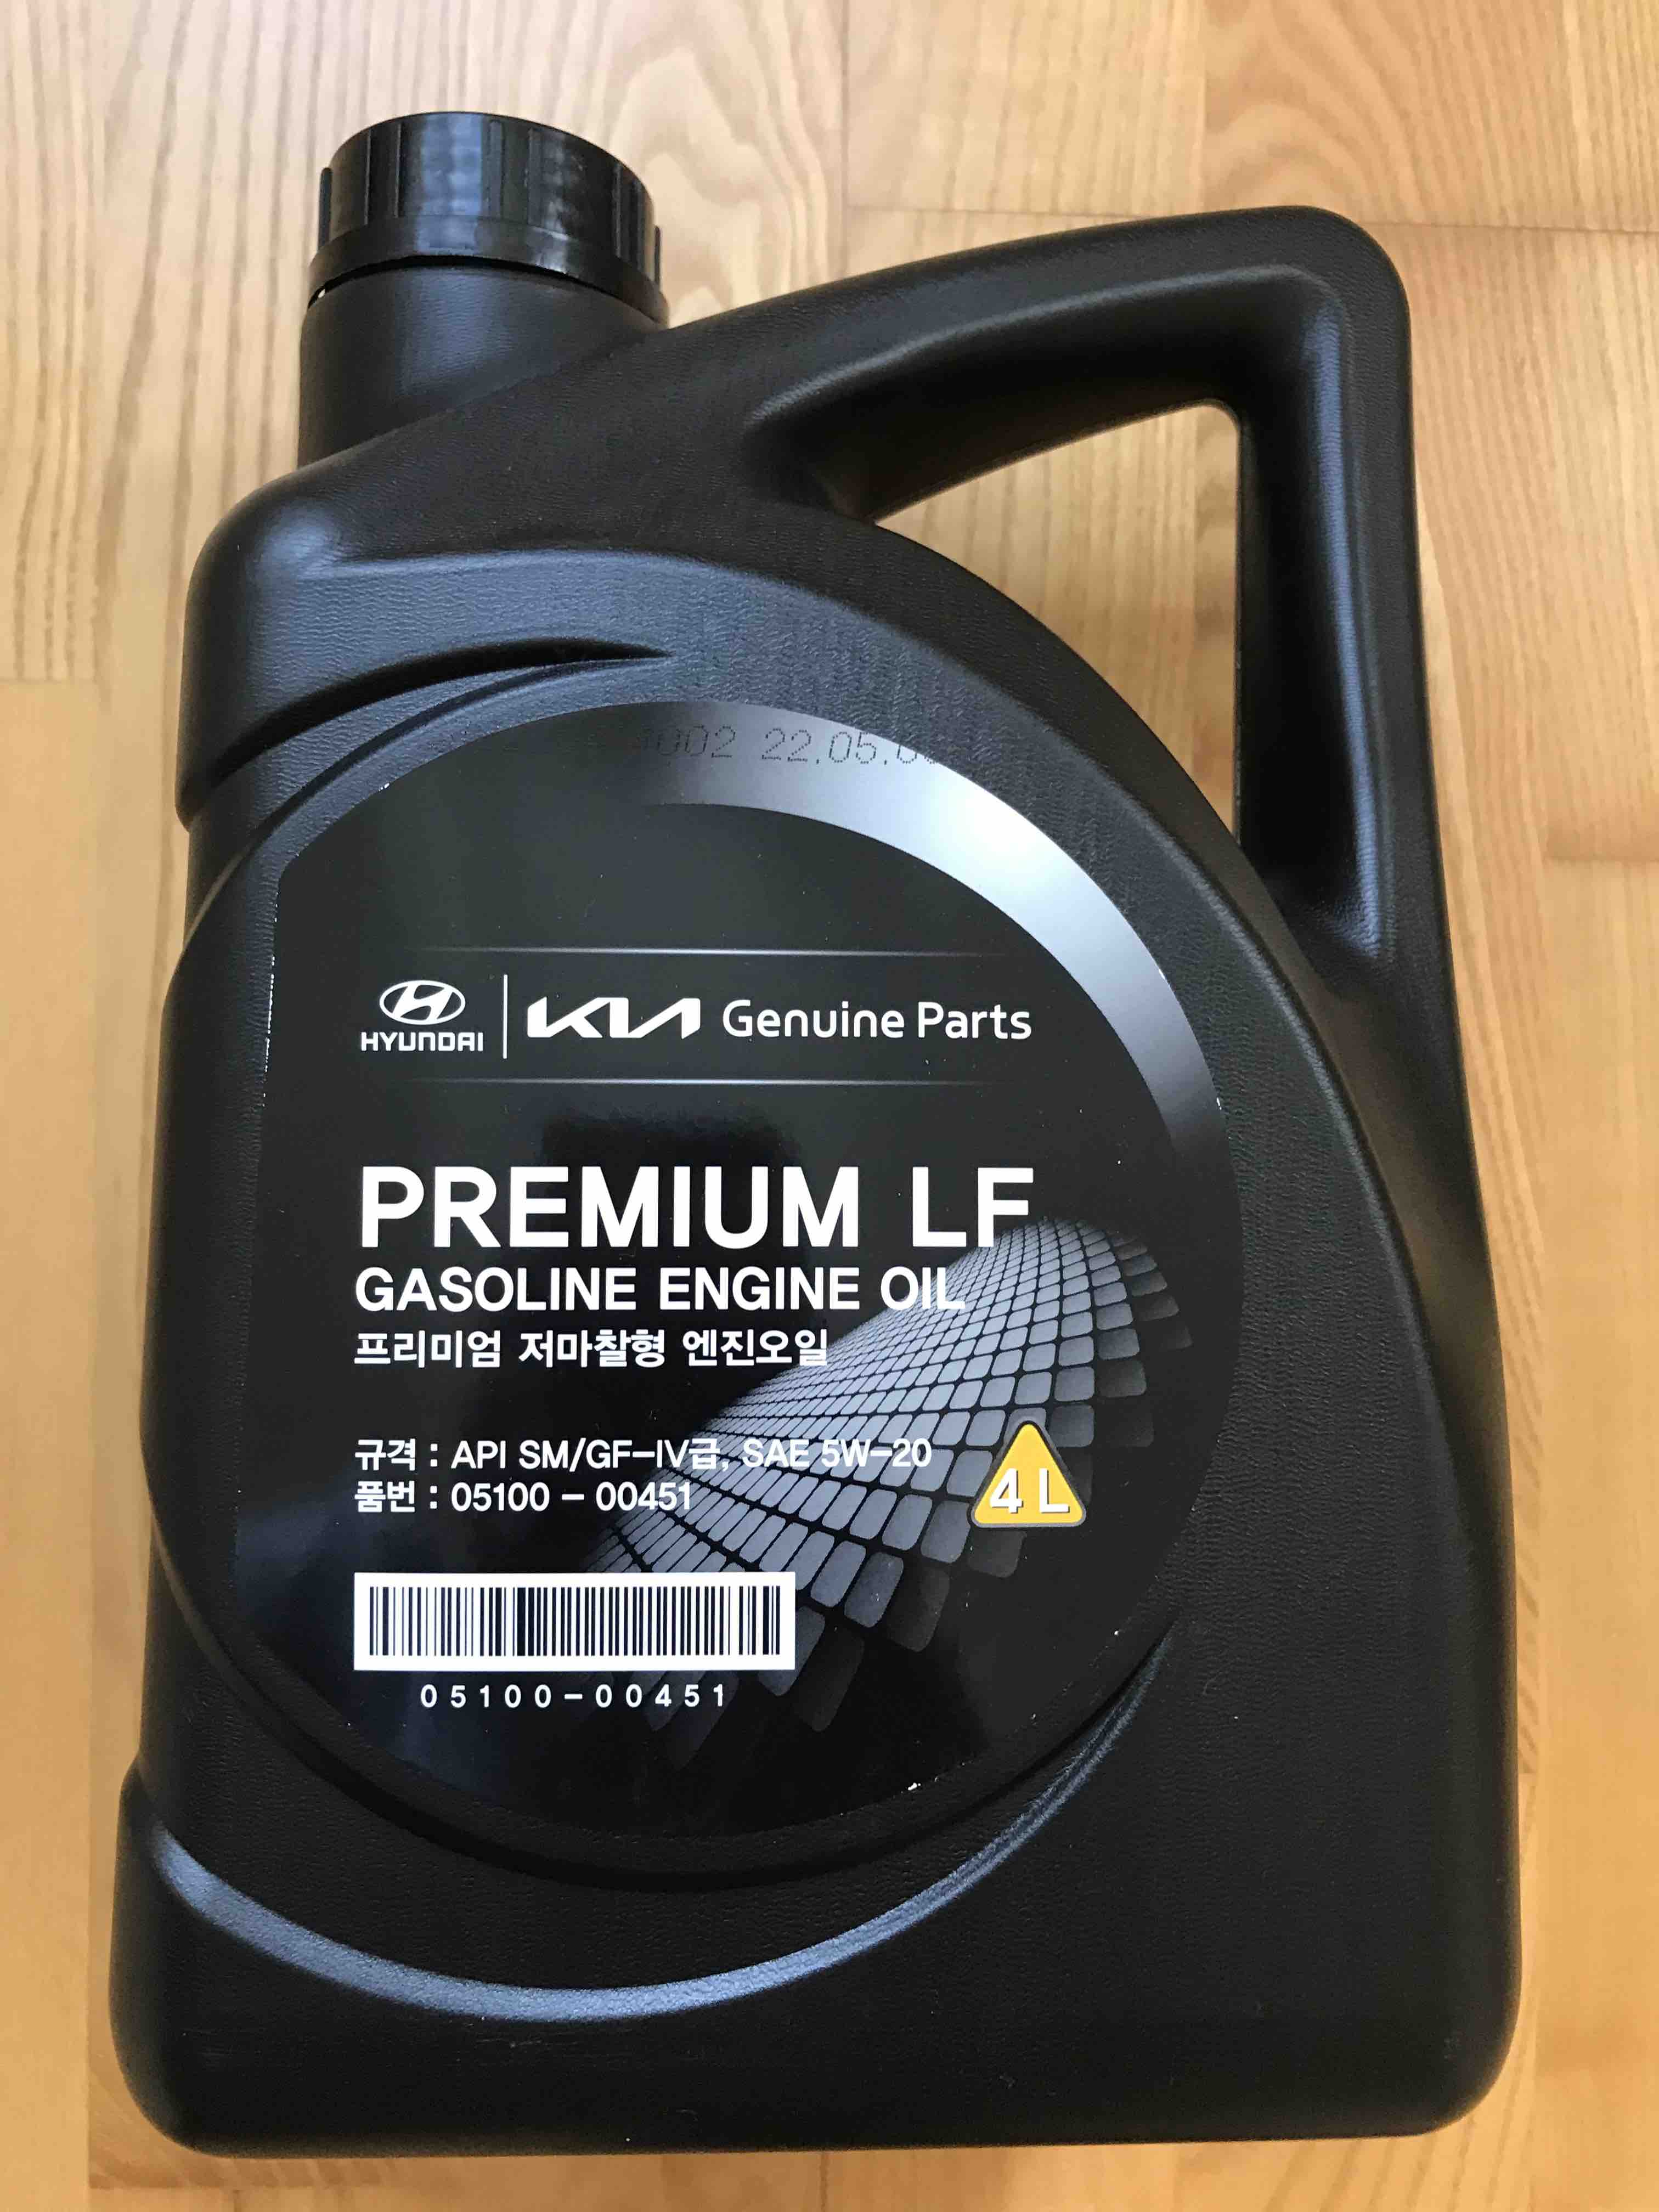 Hyundai premium lf gasoline 5w 20